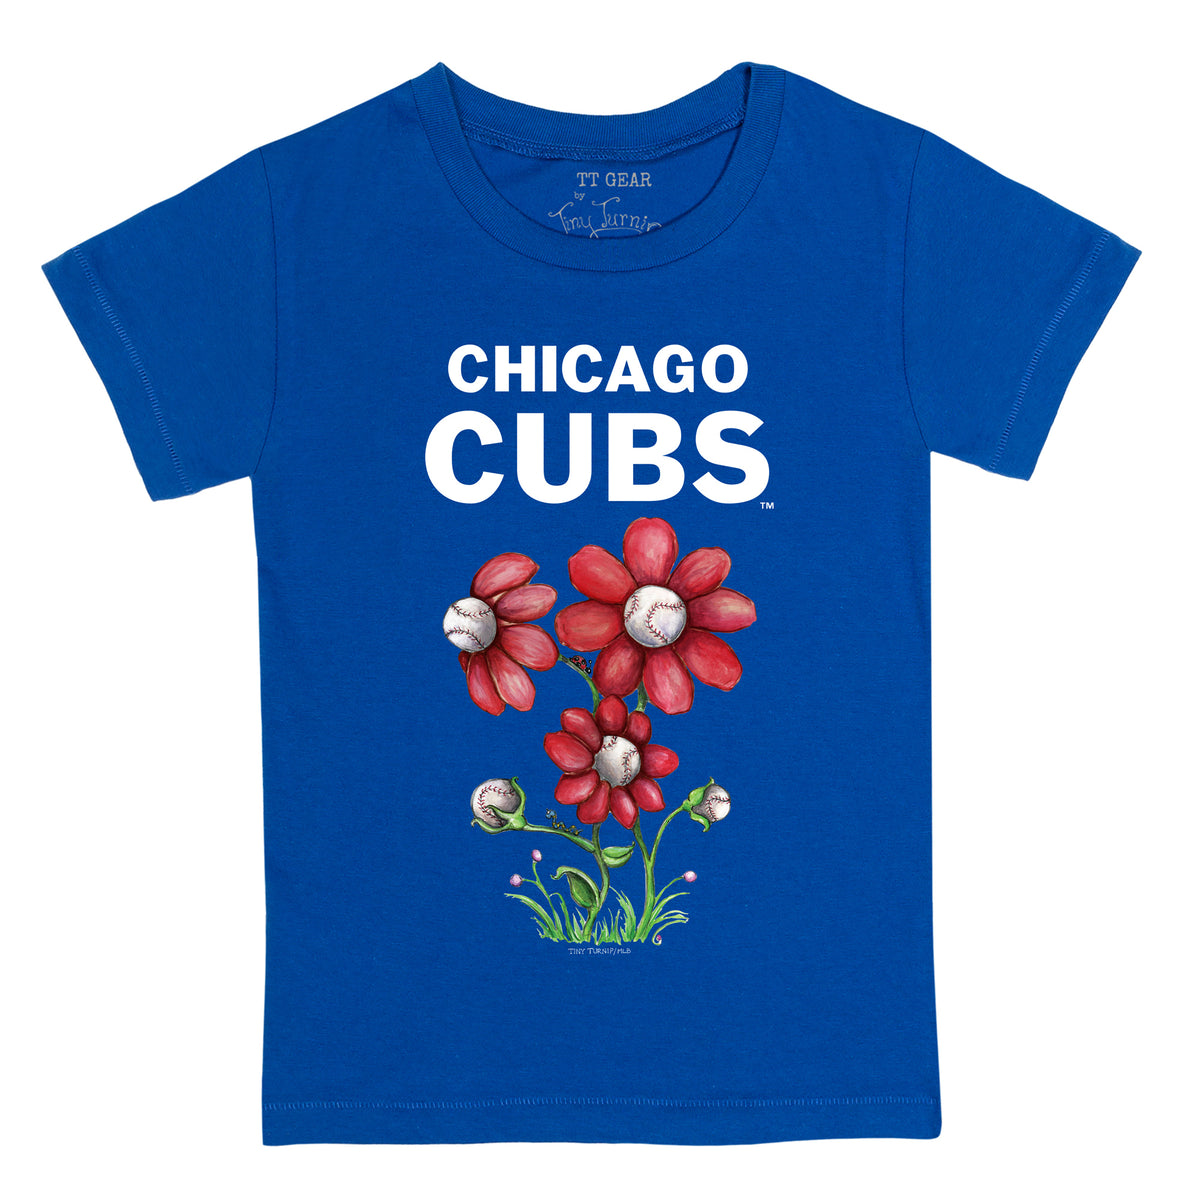 Chicago Cubs Blooming Baseballs Tee Shirt